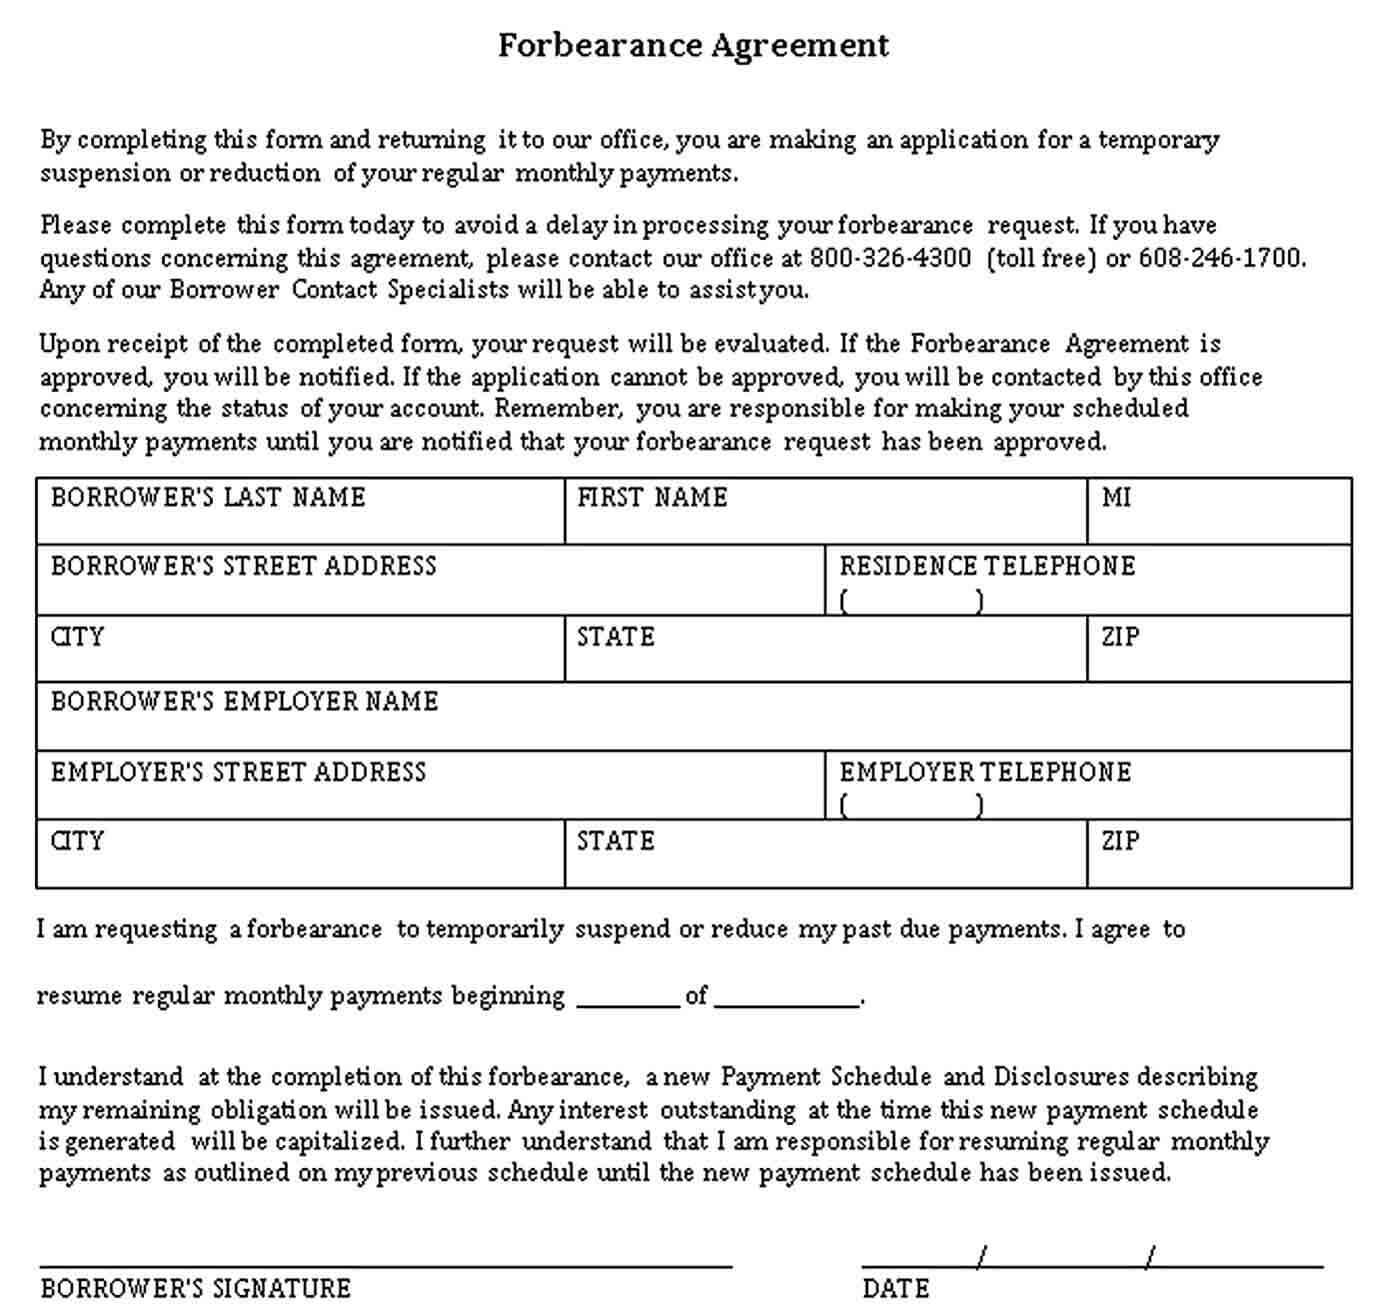 Sample Basic Forbearance Agreement Format